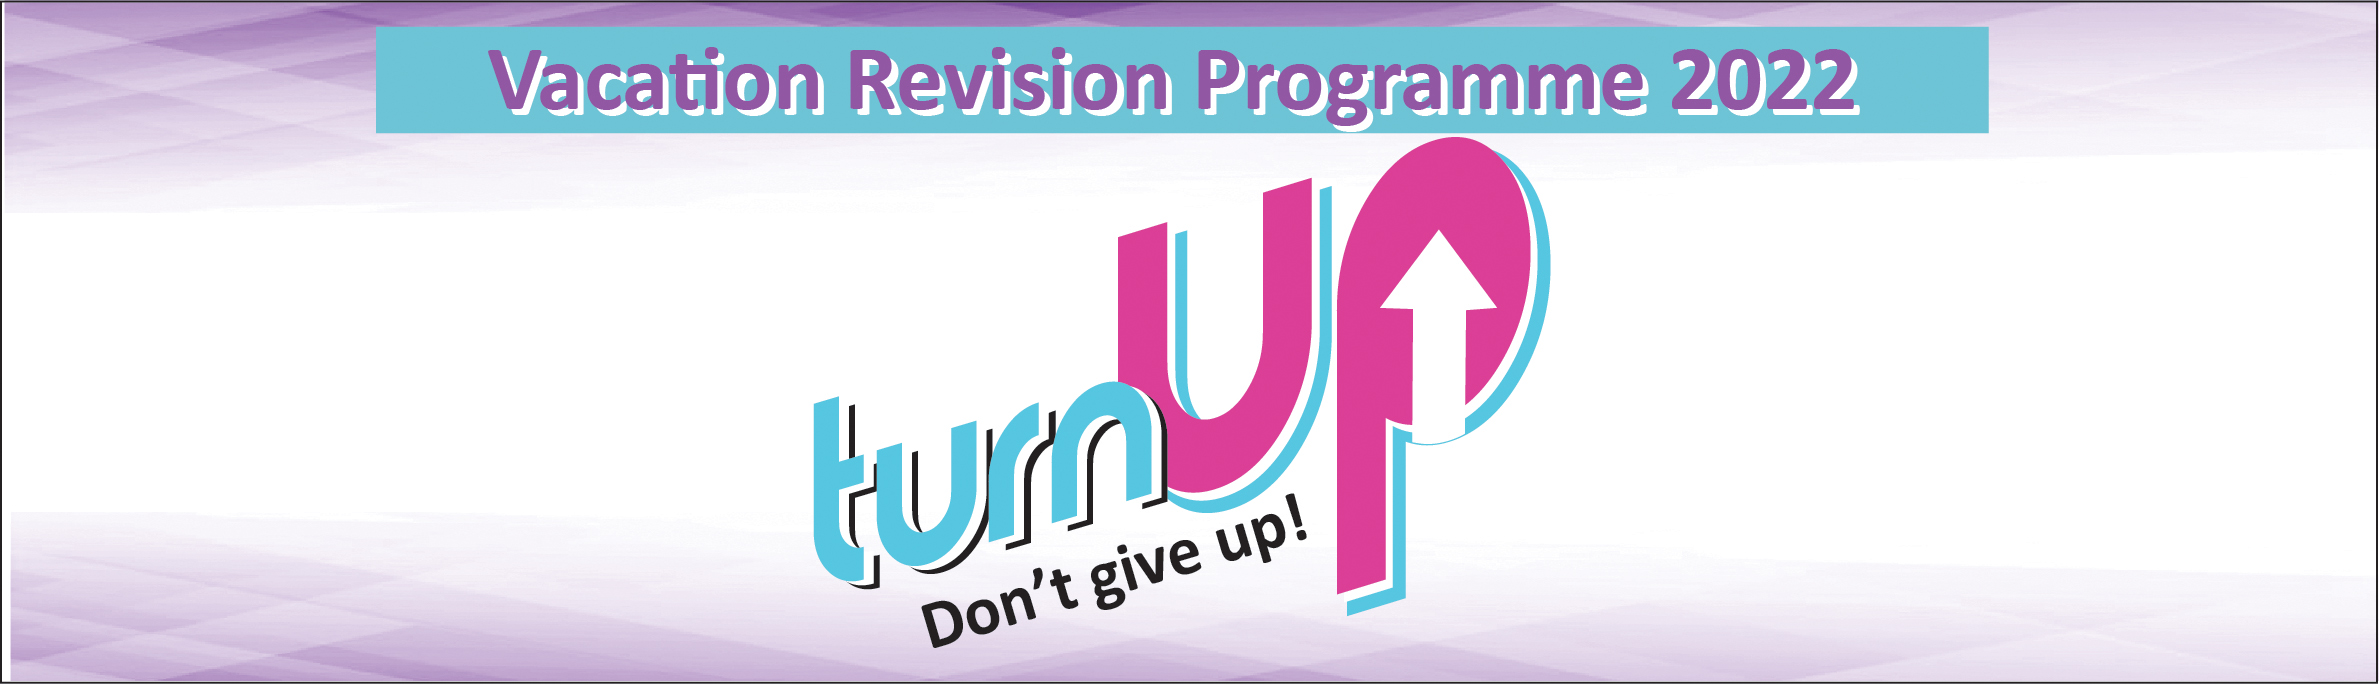 Vacation Revision Programme 2022 Registration